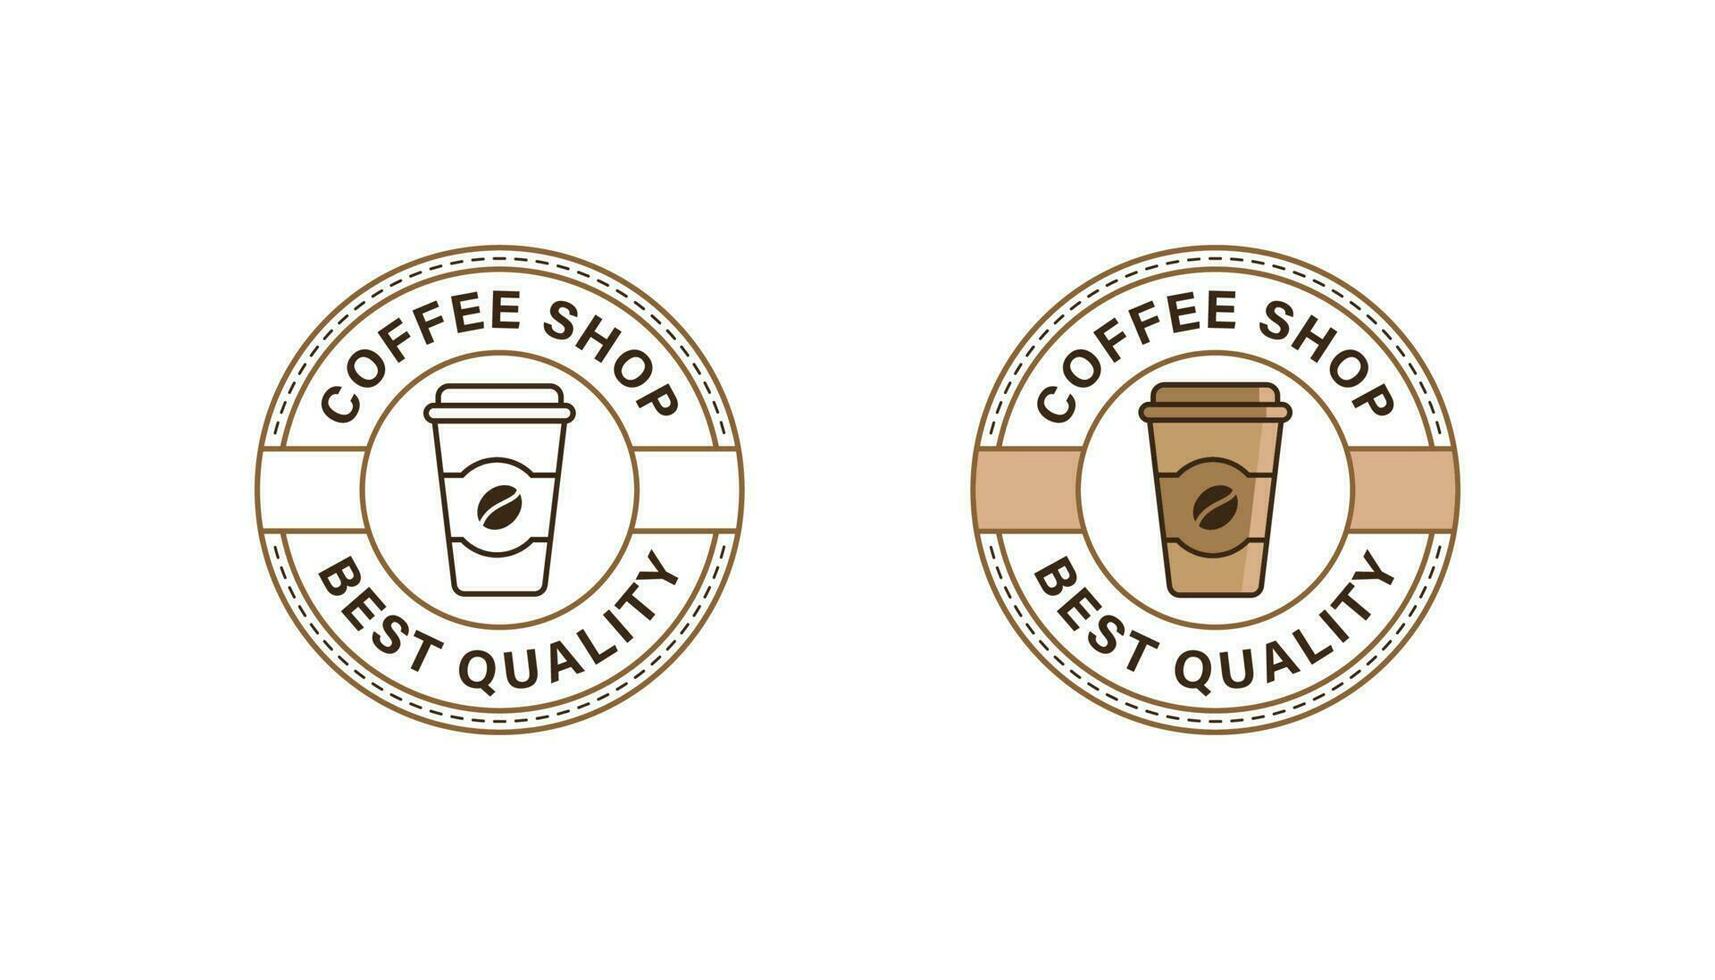 café logo insigne timbre vecteur